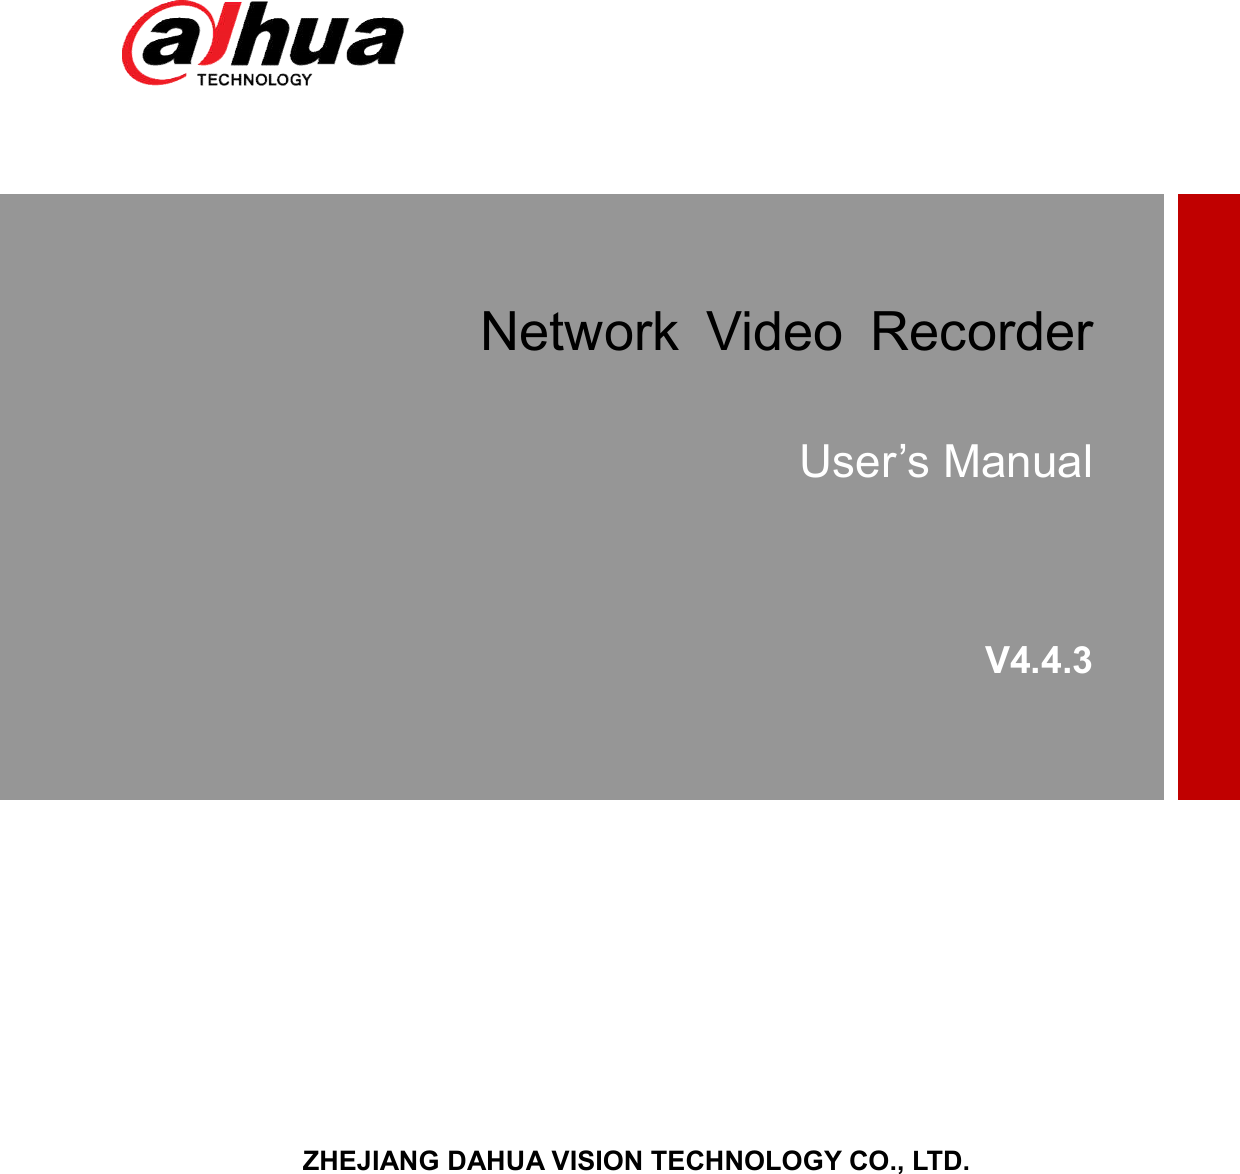       Network  Video  Recorder  User’s Manual V4.4.3                                                                                                              ZHEJIANG DAHUA VISION TECHNOLOGY CO., LTD. 